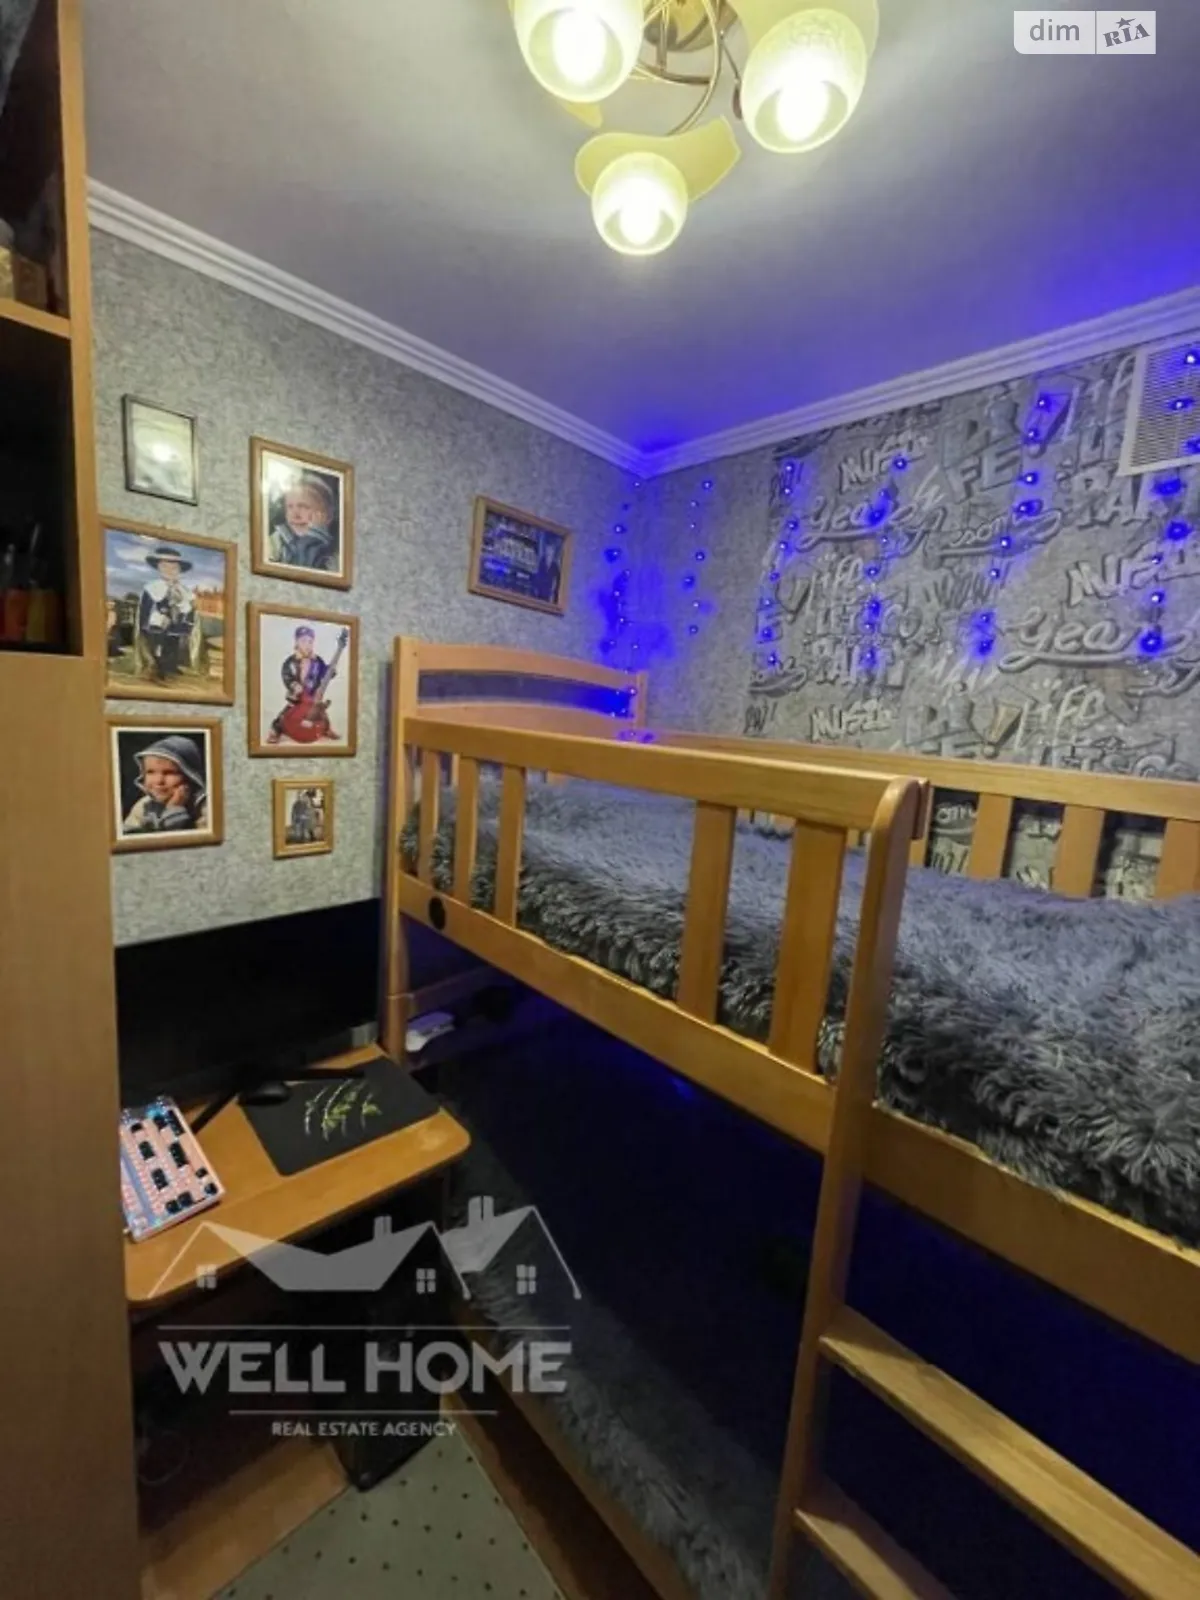 Продается комната 32.8 кв. м в Киеве, цена: 18000 $ - фото 1